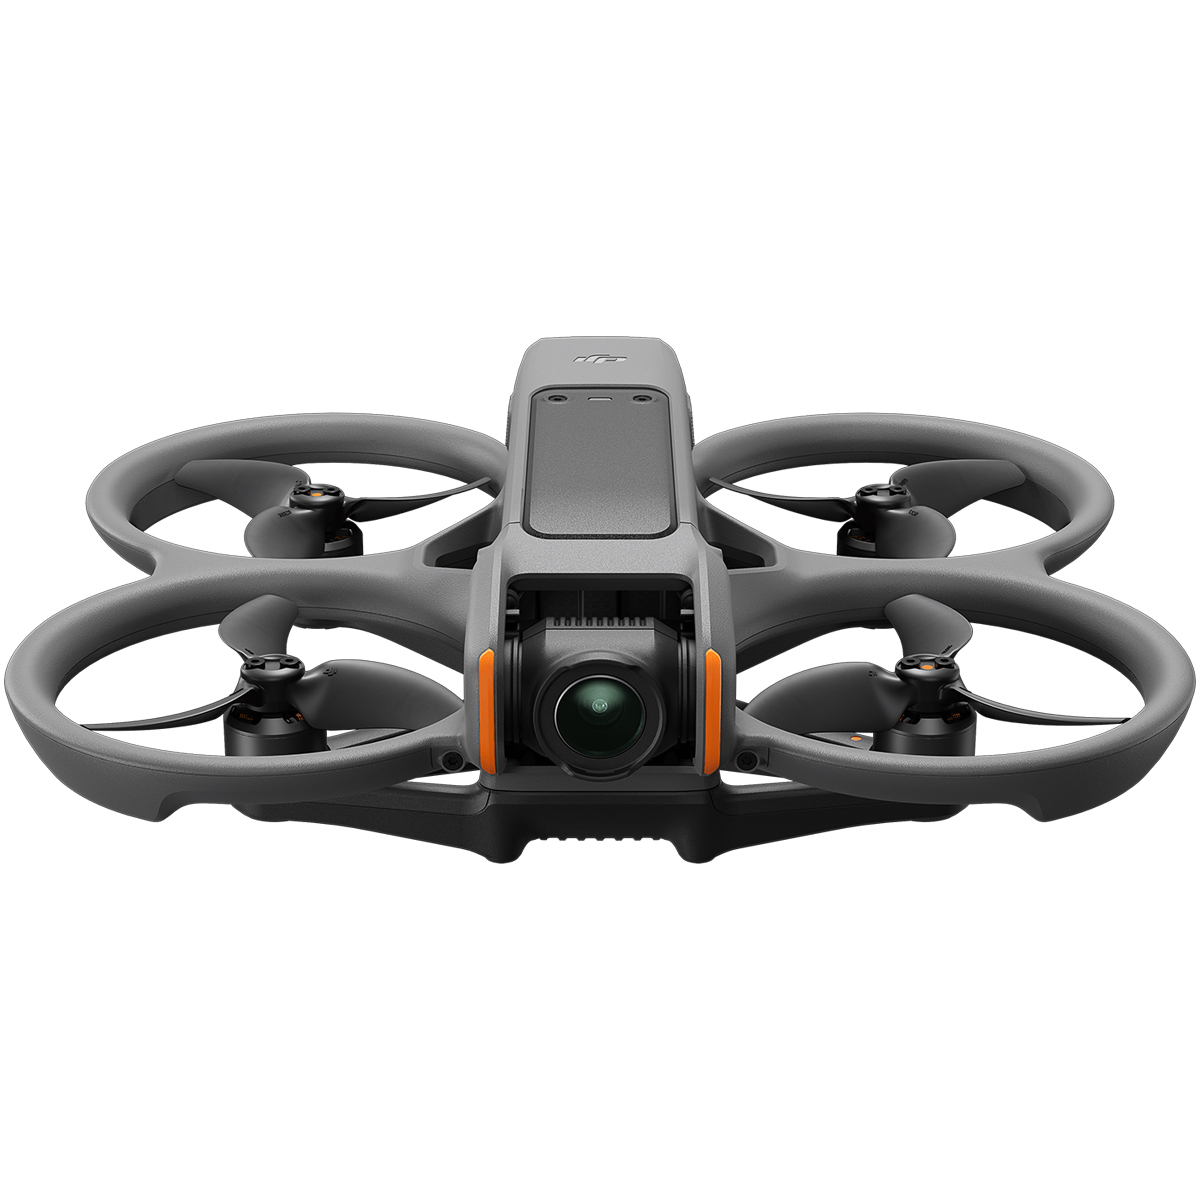 "DJI Avata 2" FPV (First Person View) drone aircraft